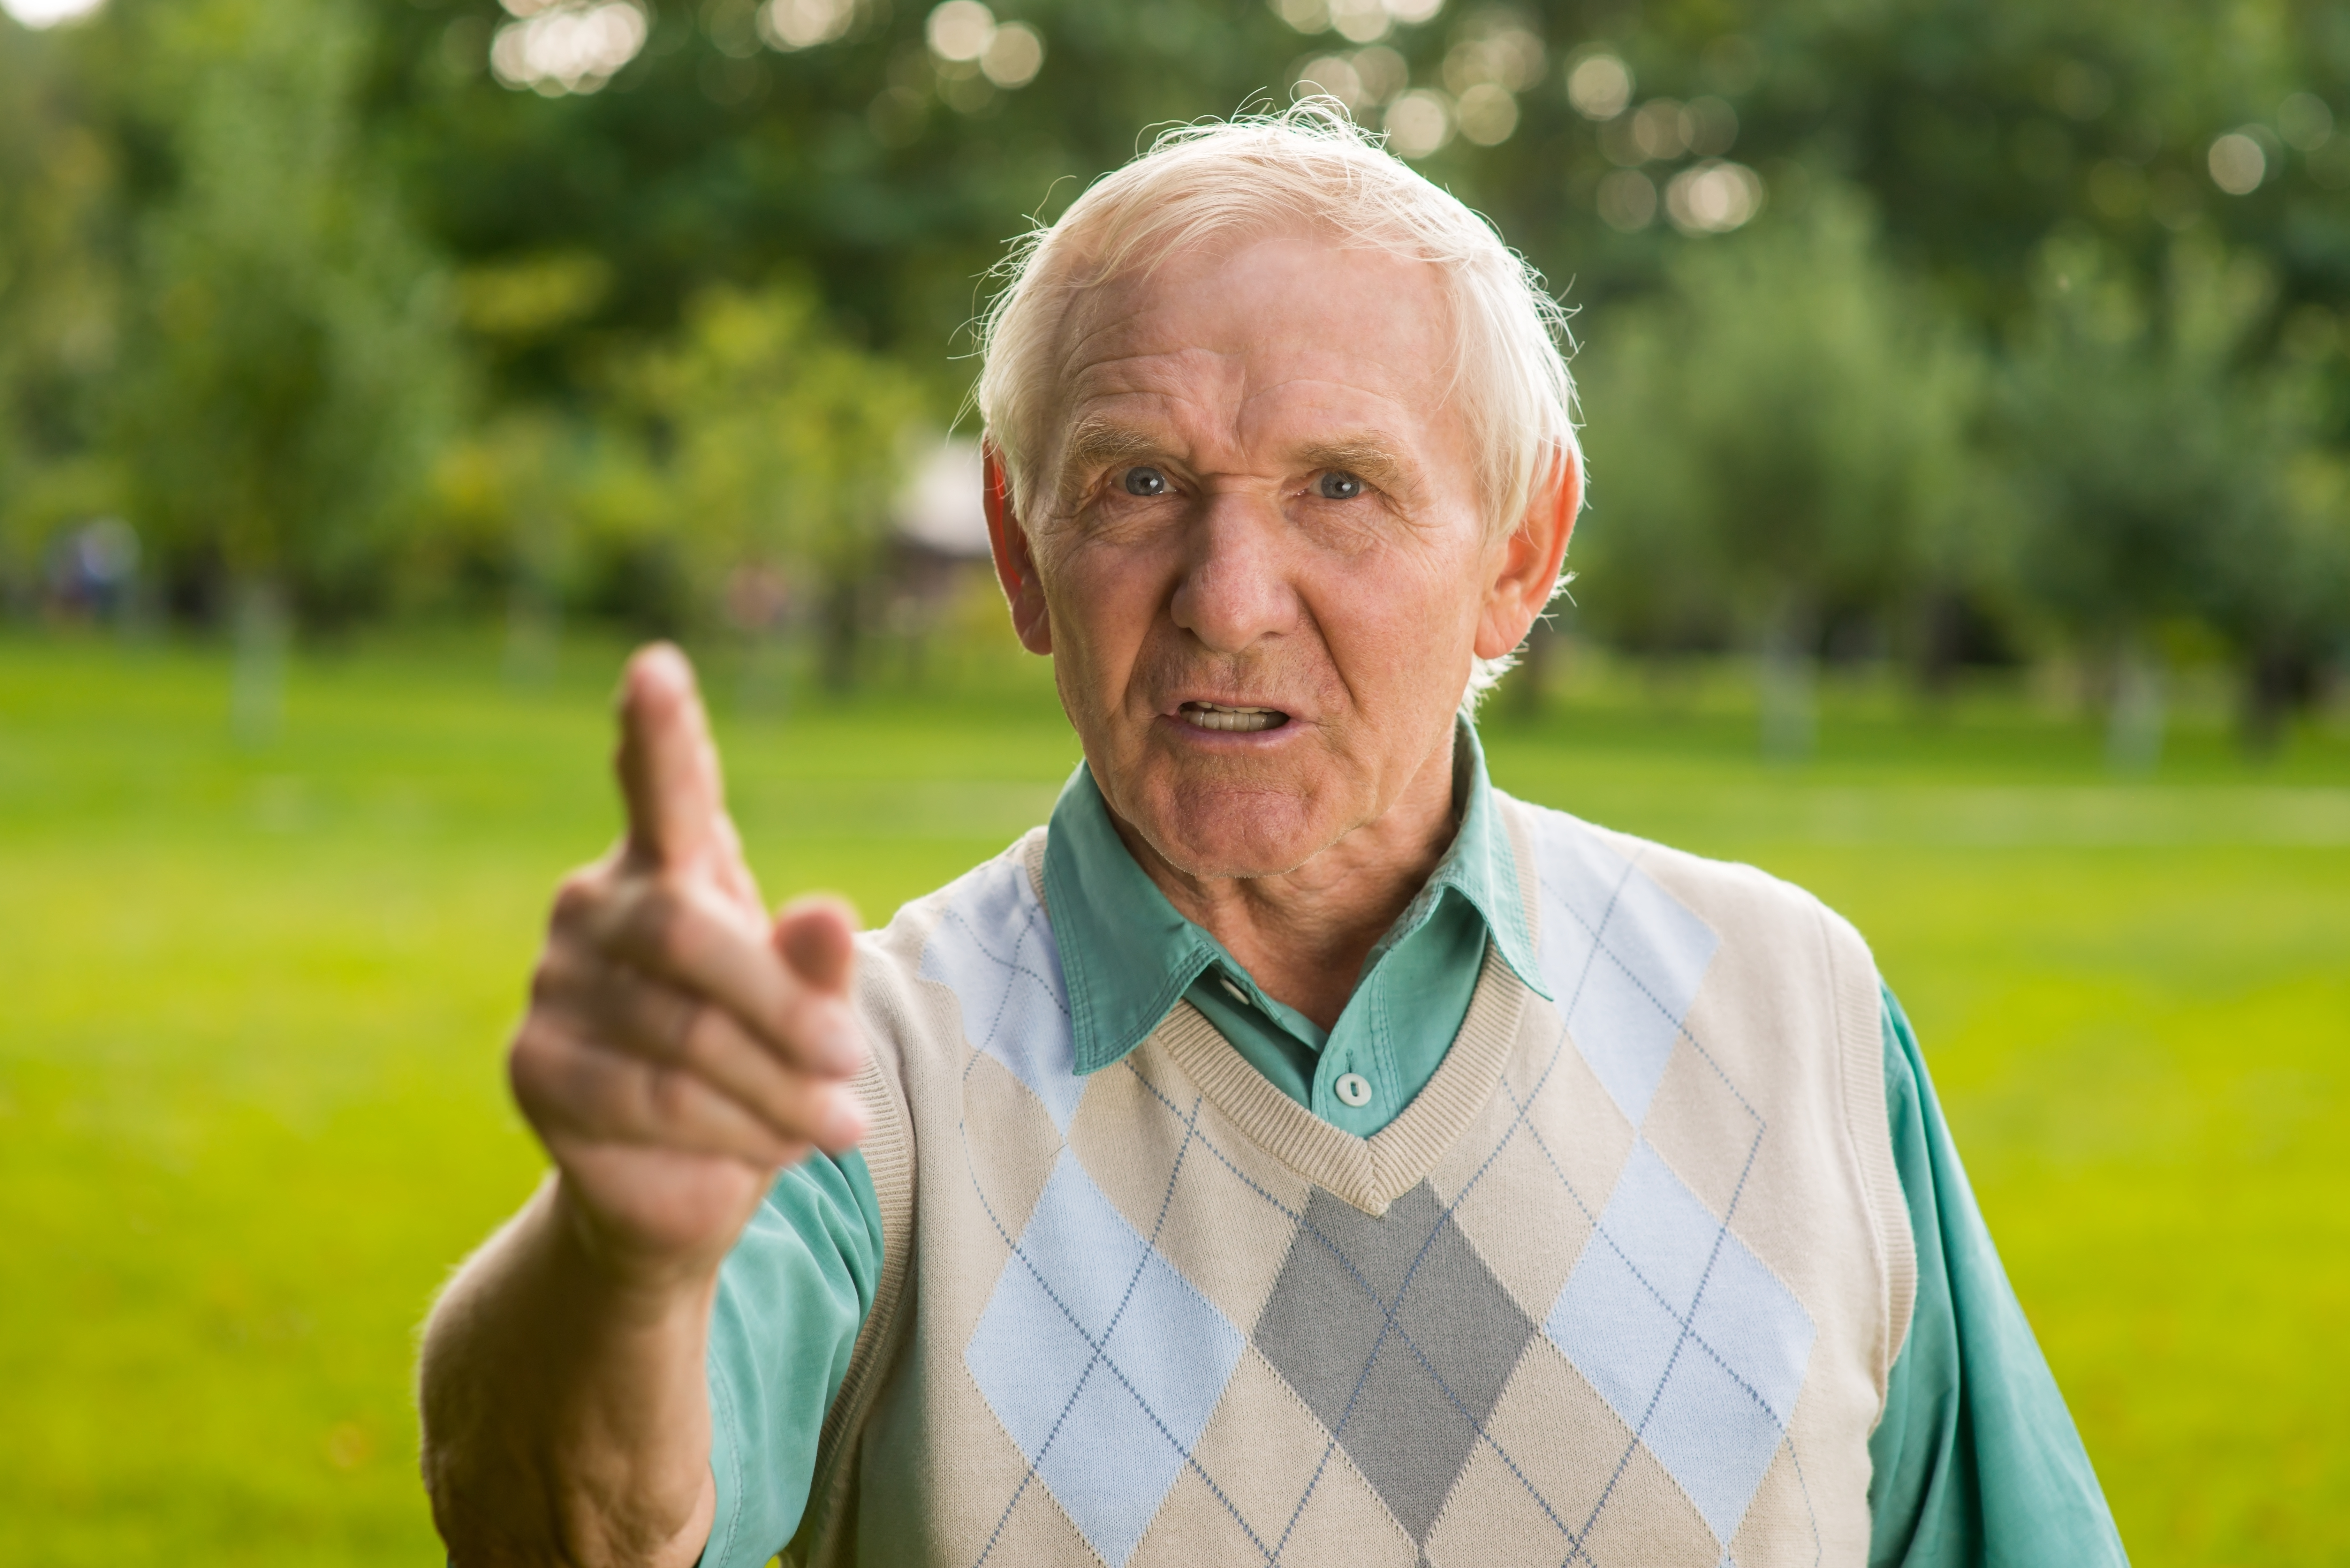 An angry senior man | Source: Shutterstock